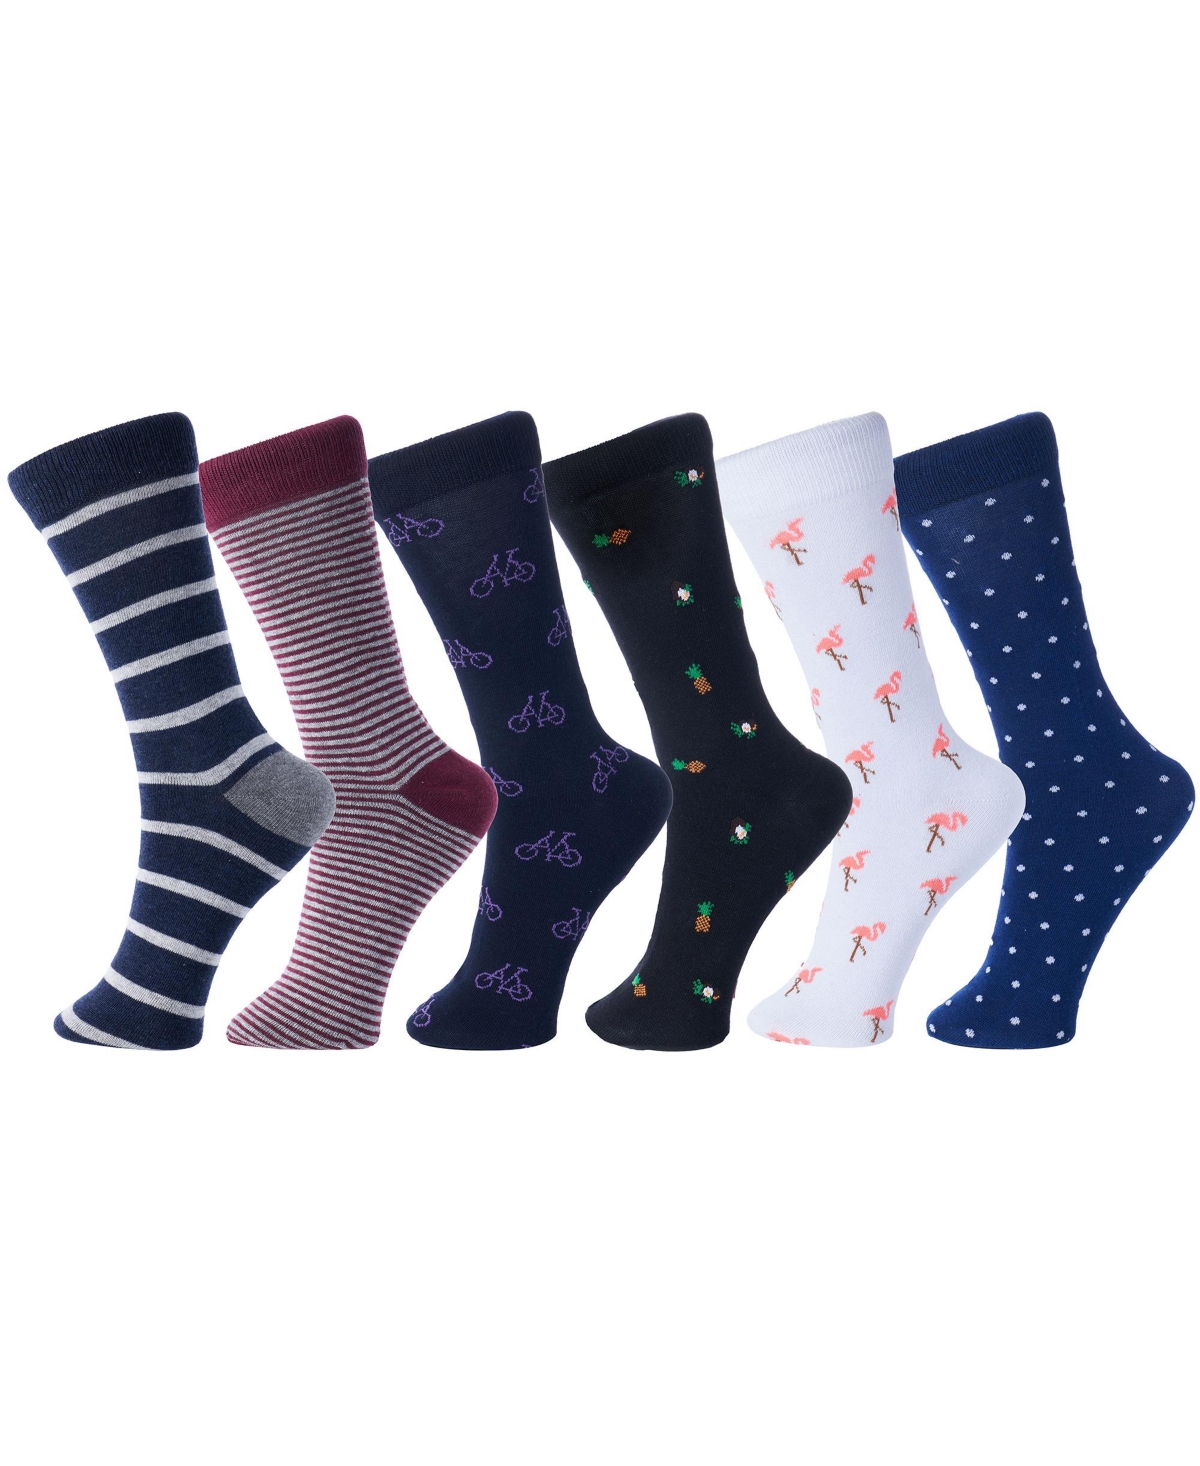 6 Pack Mens Cotton Dress Socks Mid Calf Argyle Pattern Solids Set - Fun pack